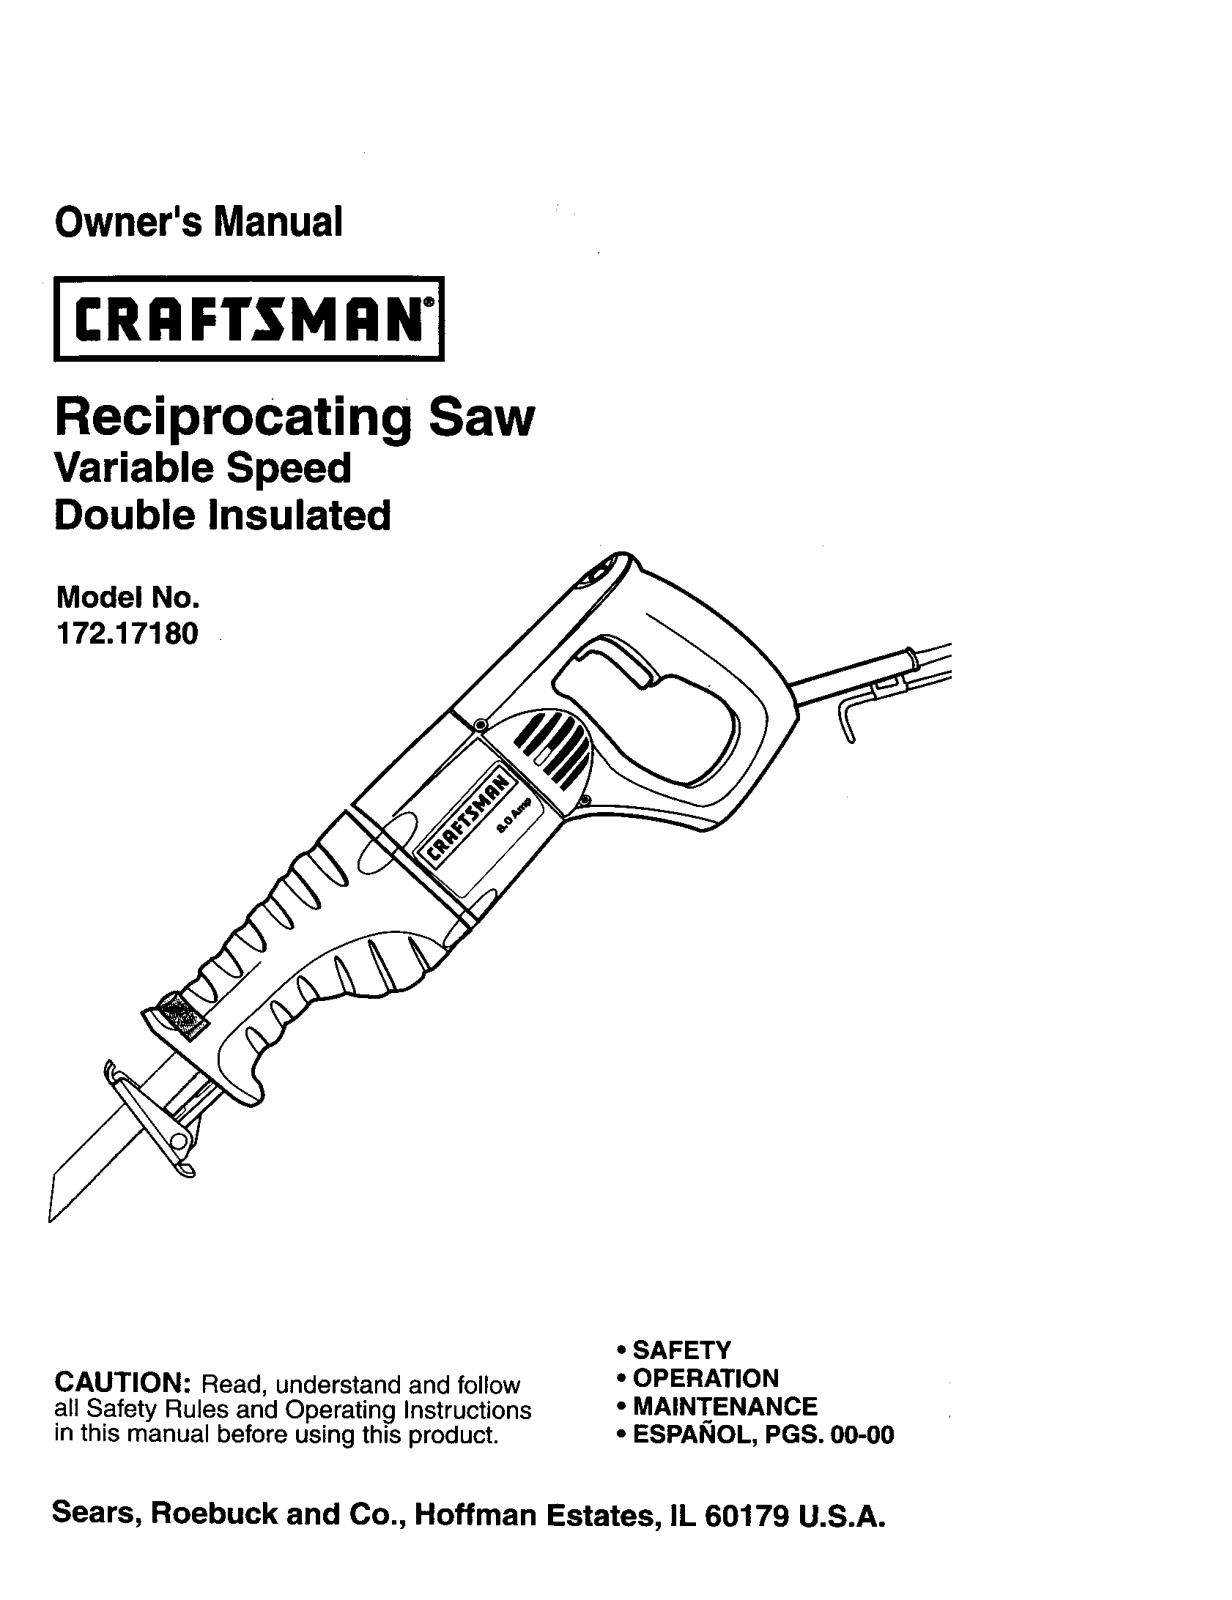 Craftsman 17217180, 172171800 Owner’s Manual